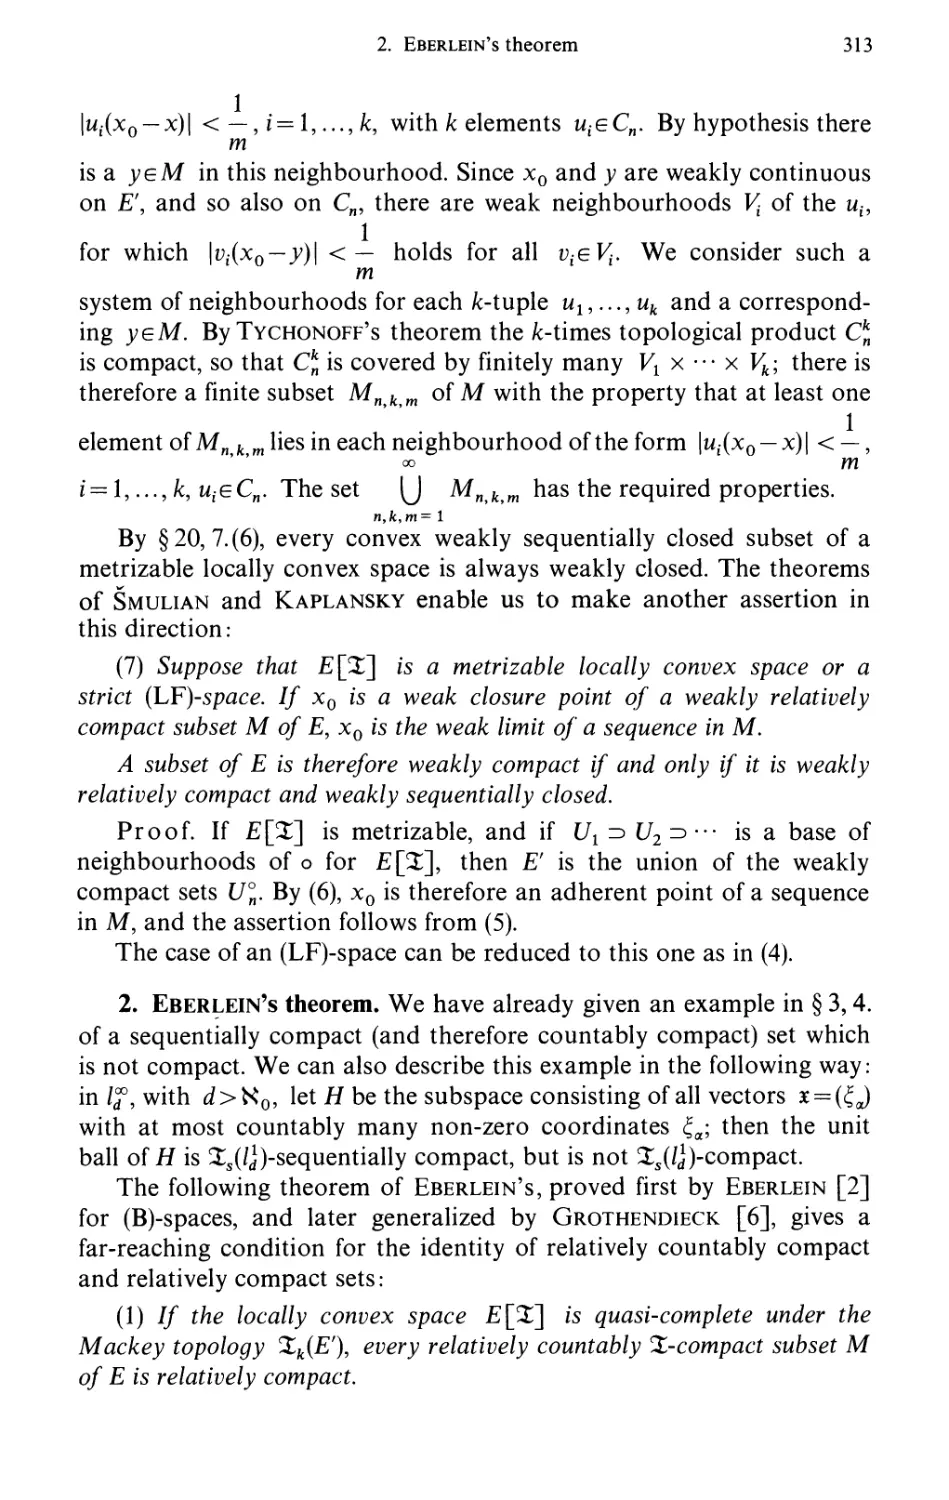 2. Eberlein's theorem